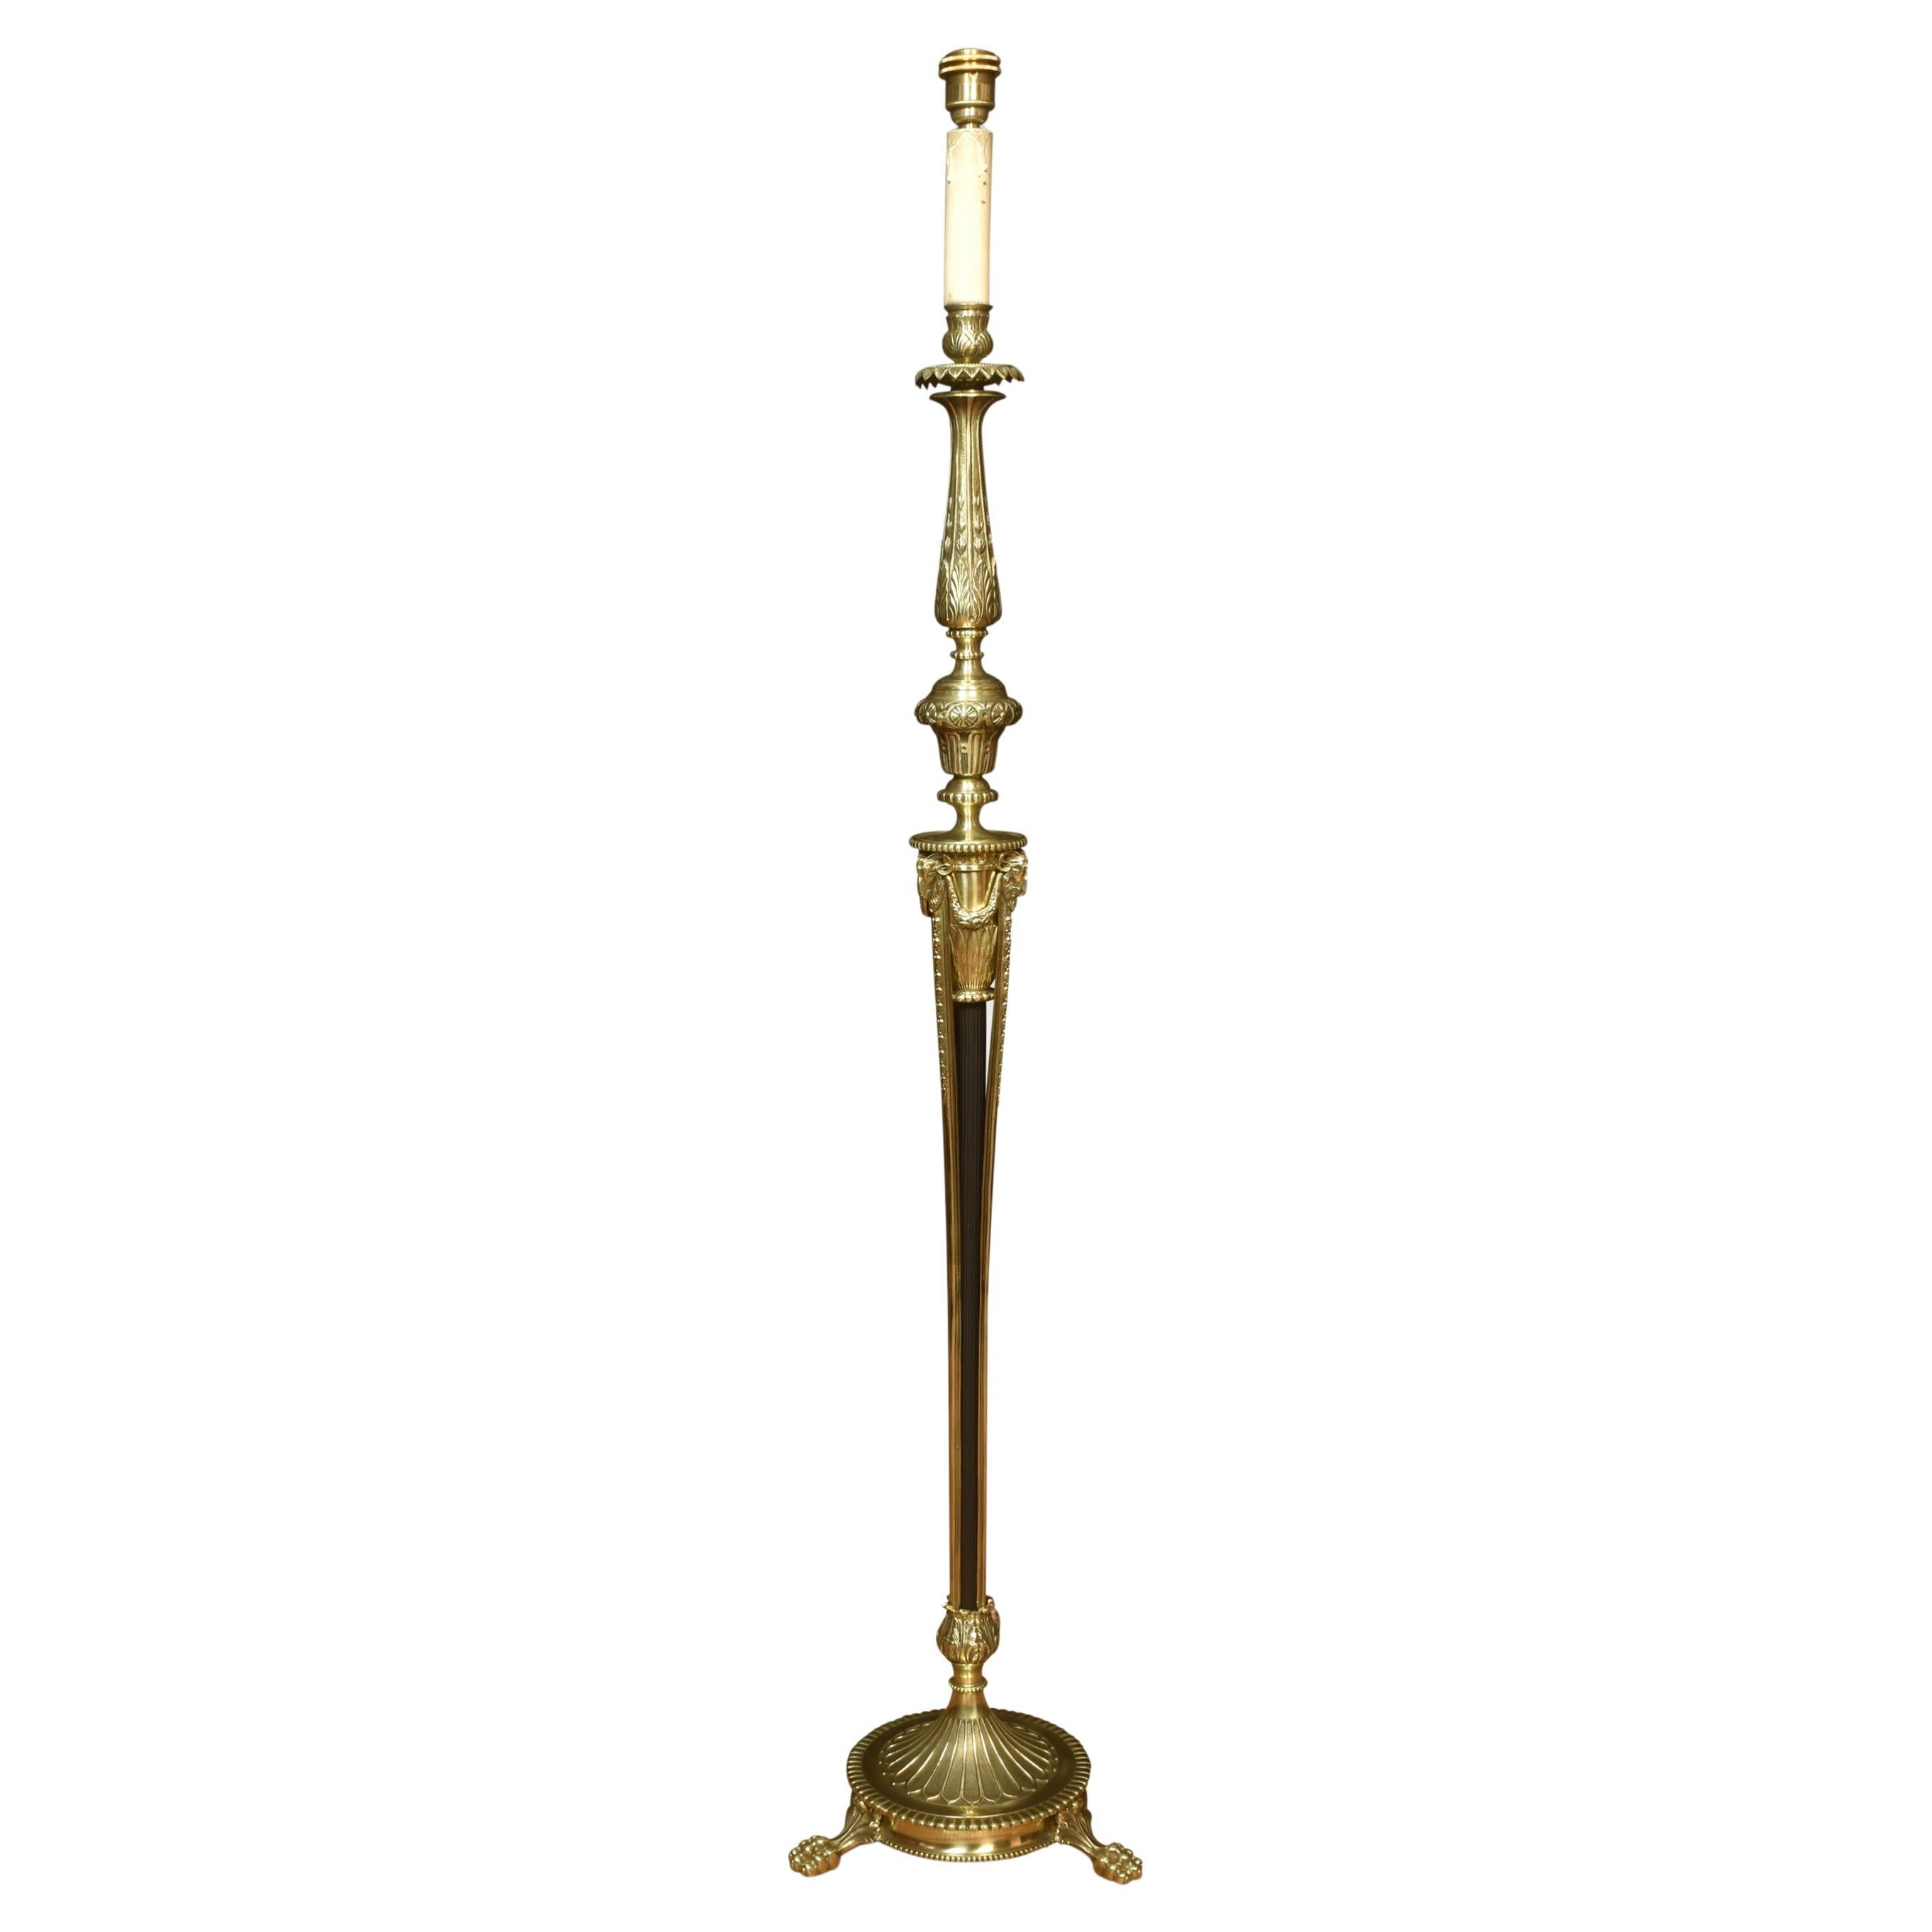 Neo Classical Standard Lamp